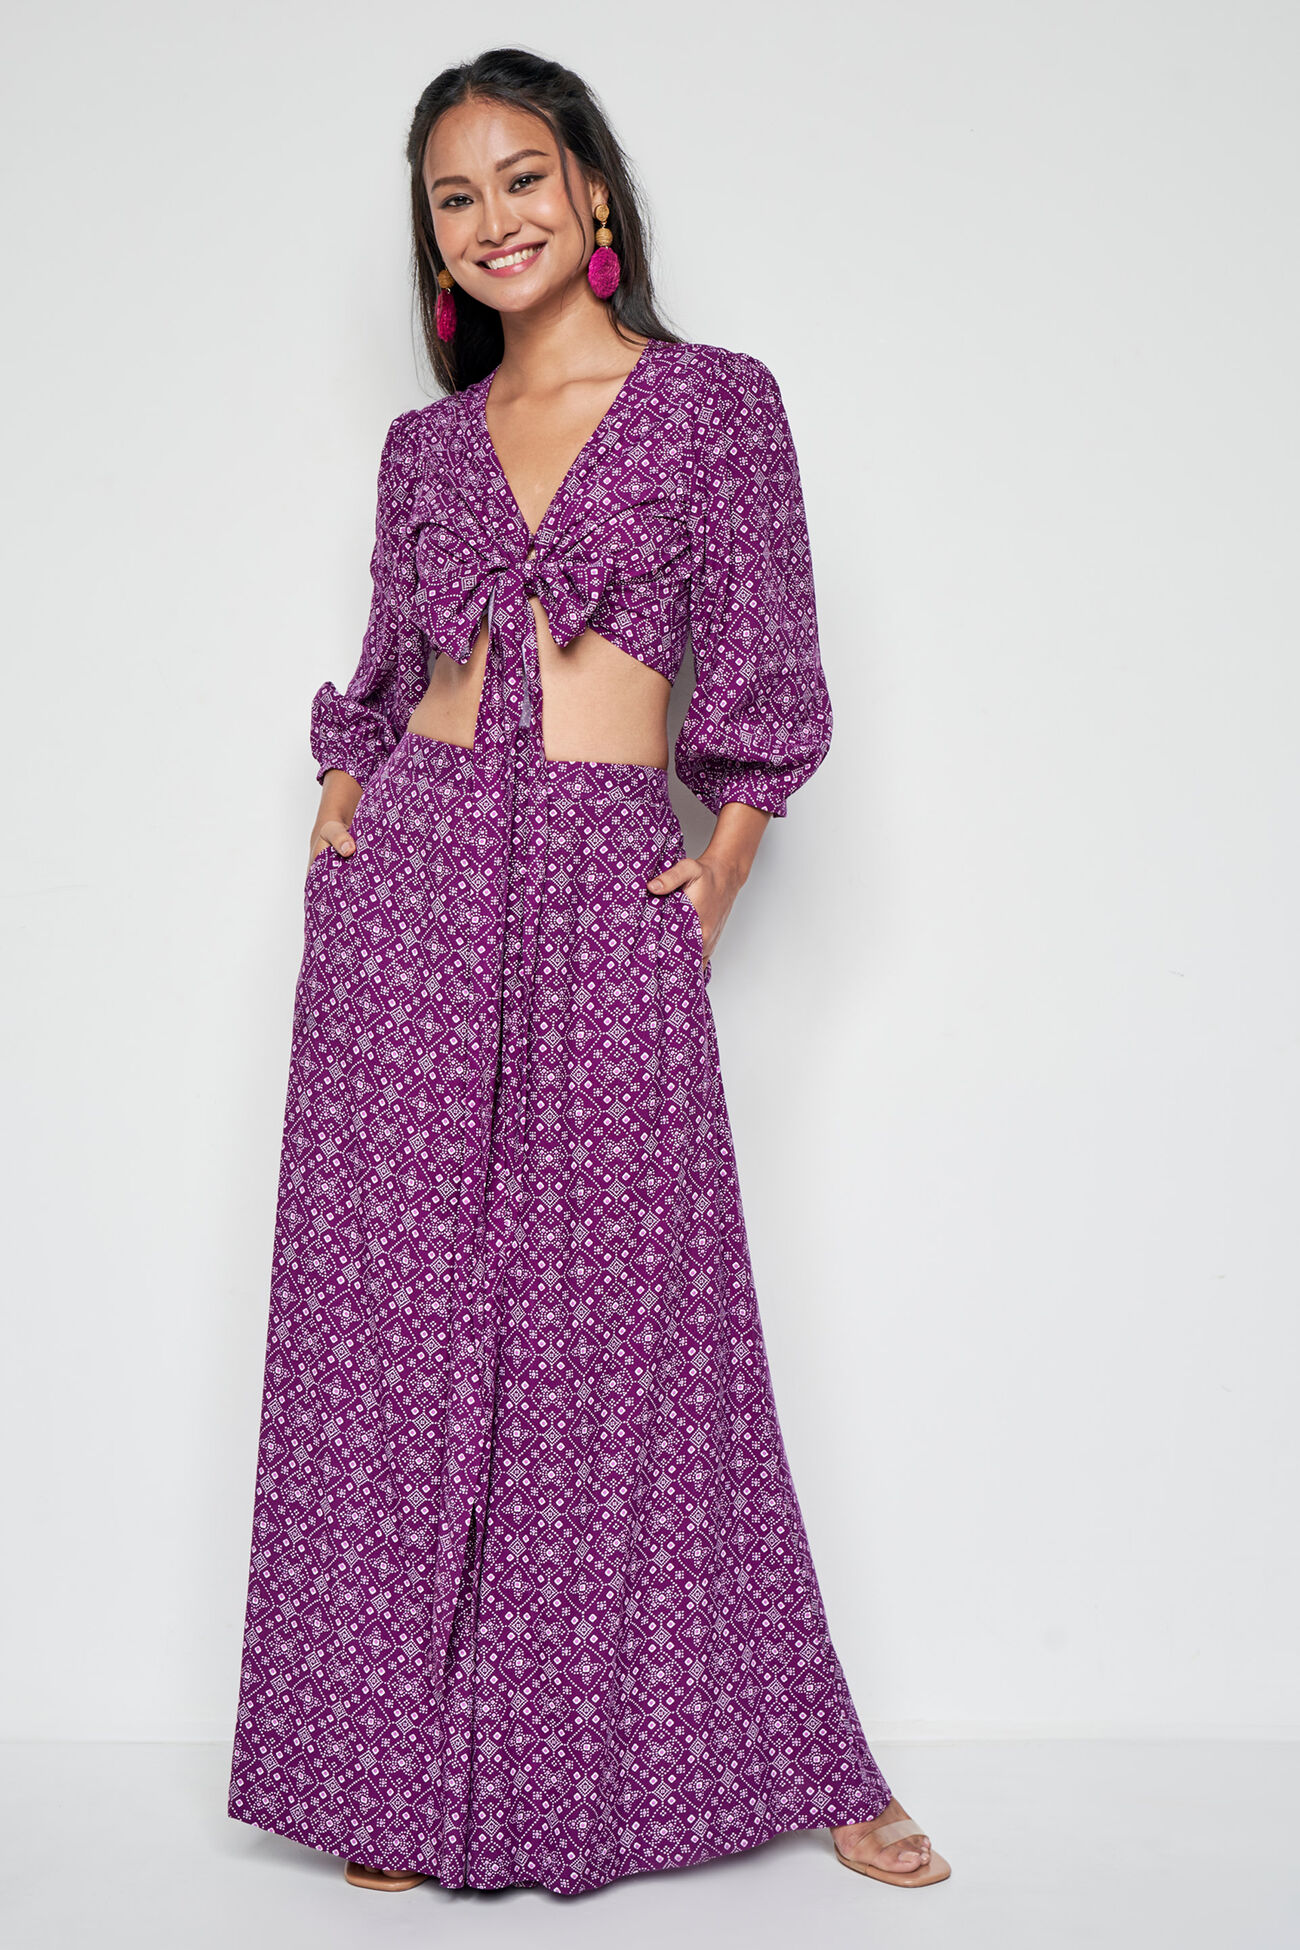 Whispers Of Lavender Skirt Set, Purple, image 1